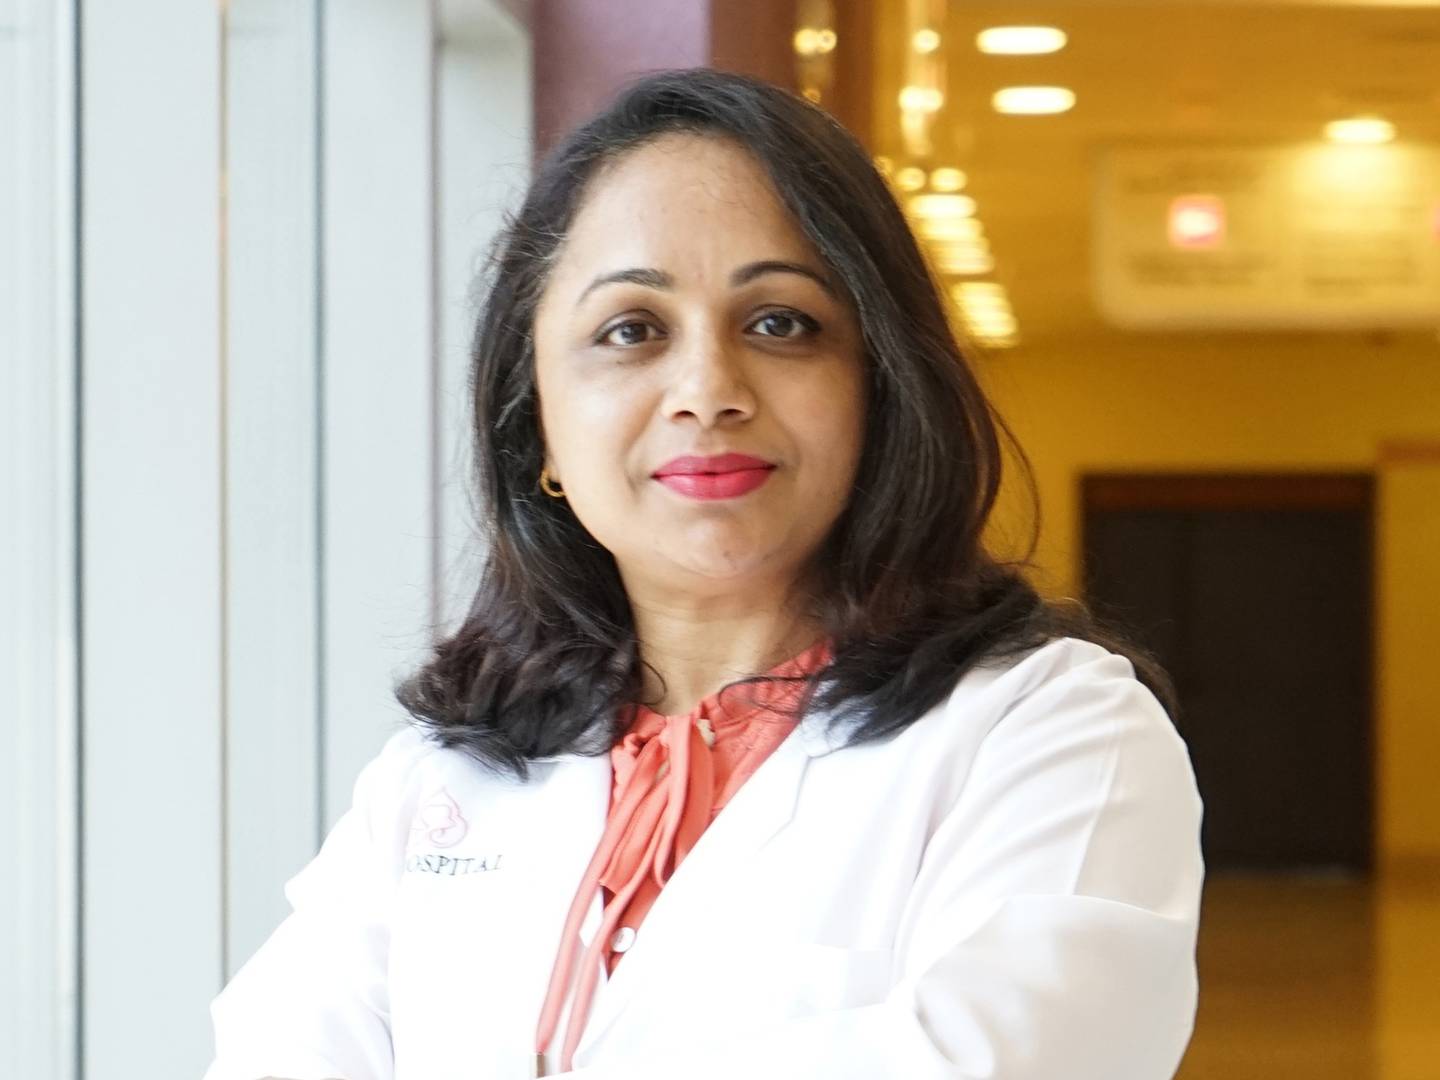 Dr. Rashmi Kiran von den RAK-Krankenhäusern